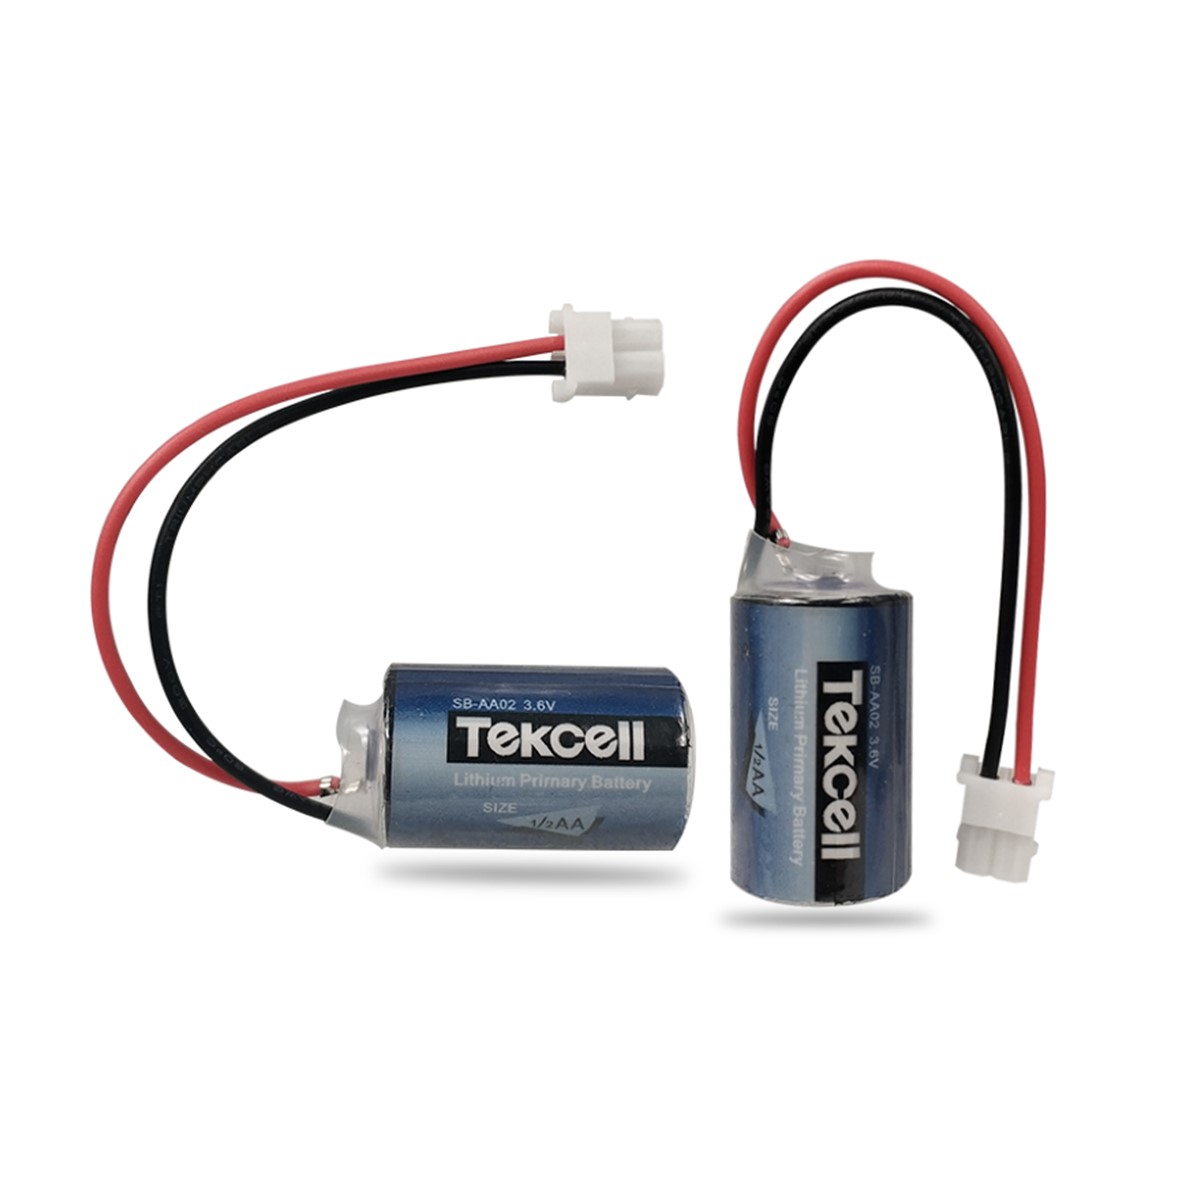 Tekcell SB-AA02 3.6V 1/2AA PLC Lithium Battery LS14250 w/ Plug